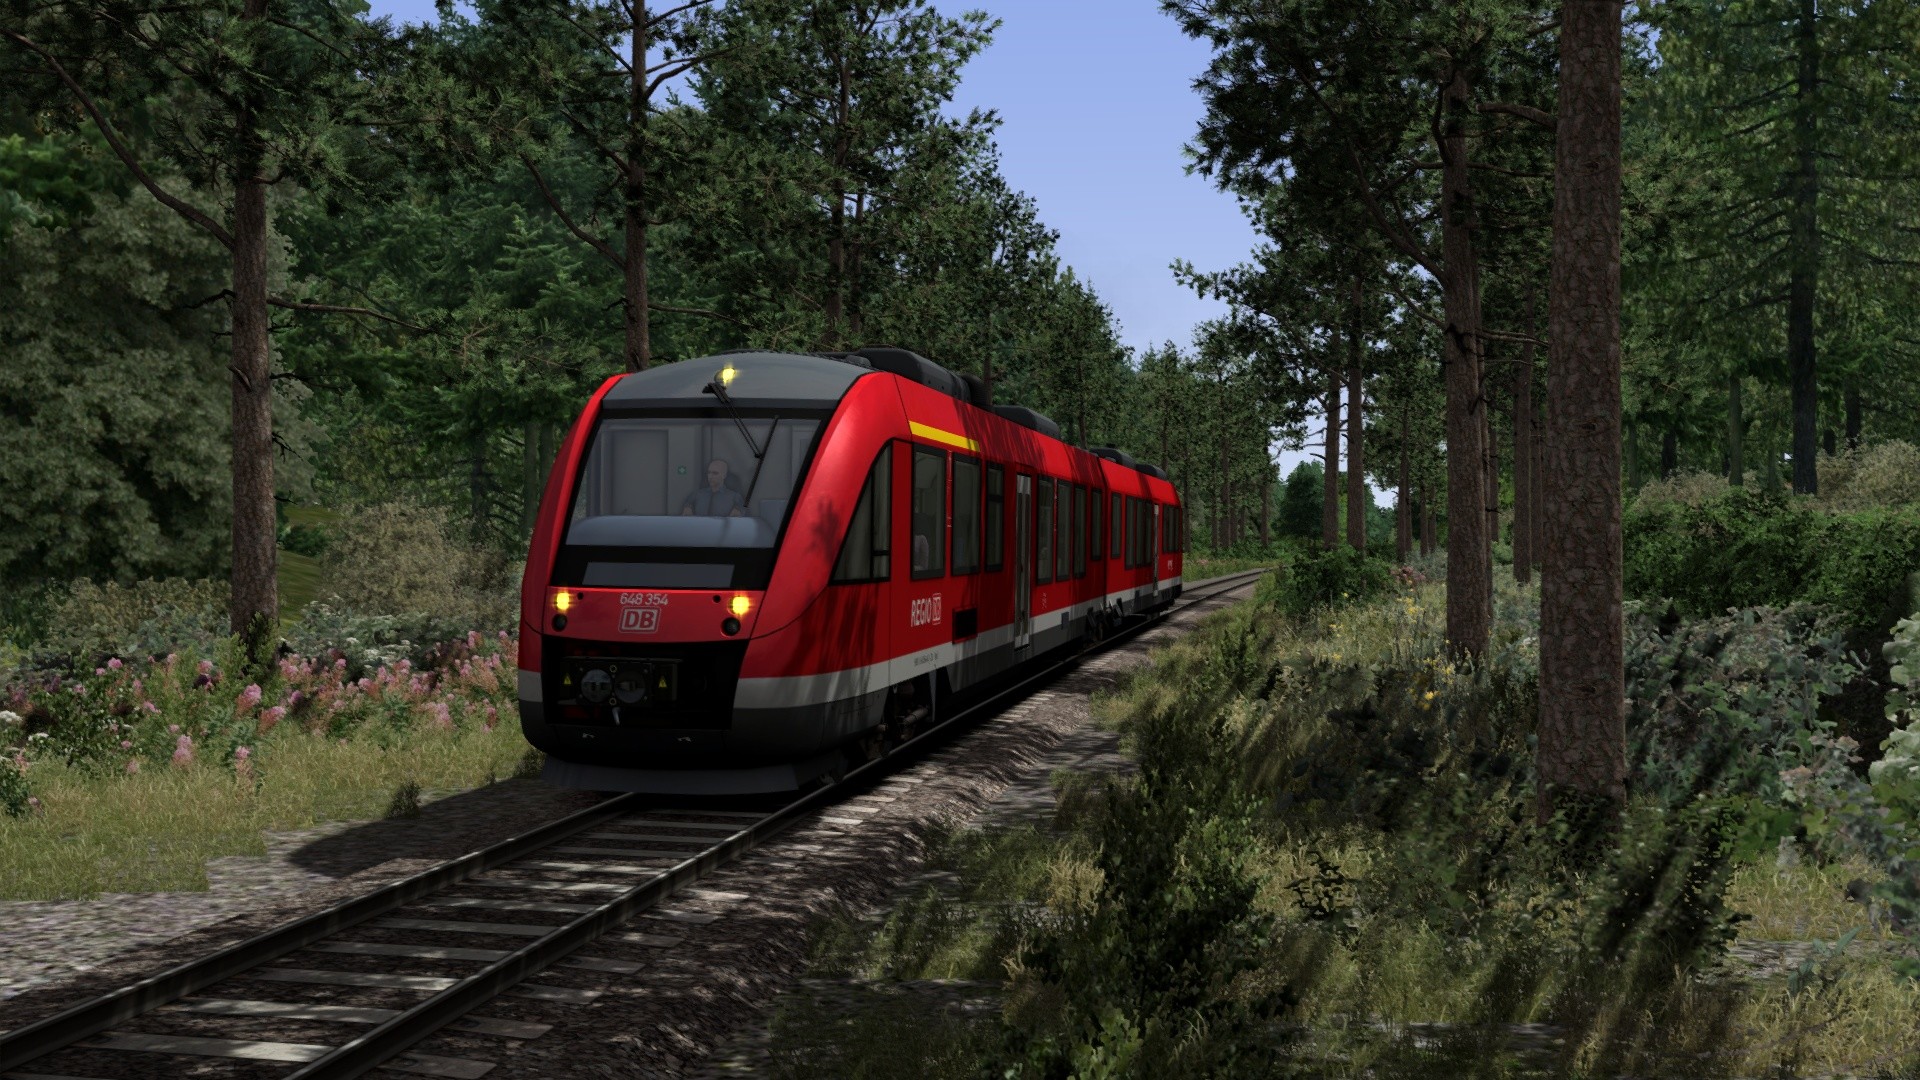 Train Simulator: Norddeutsche-Bahn: Kiel - Lübeck Route Add-On DLC Steam CD Key 5.13 USD